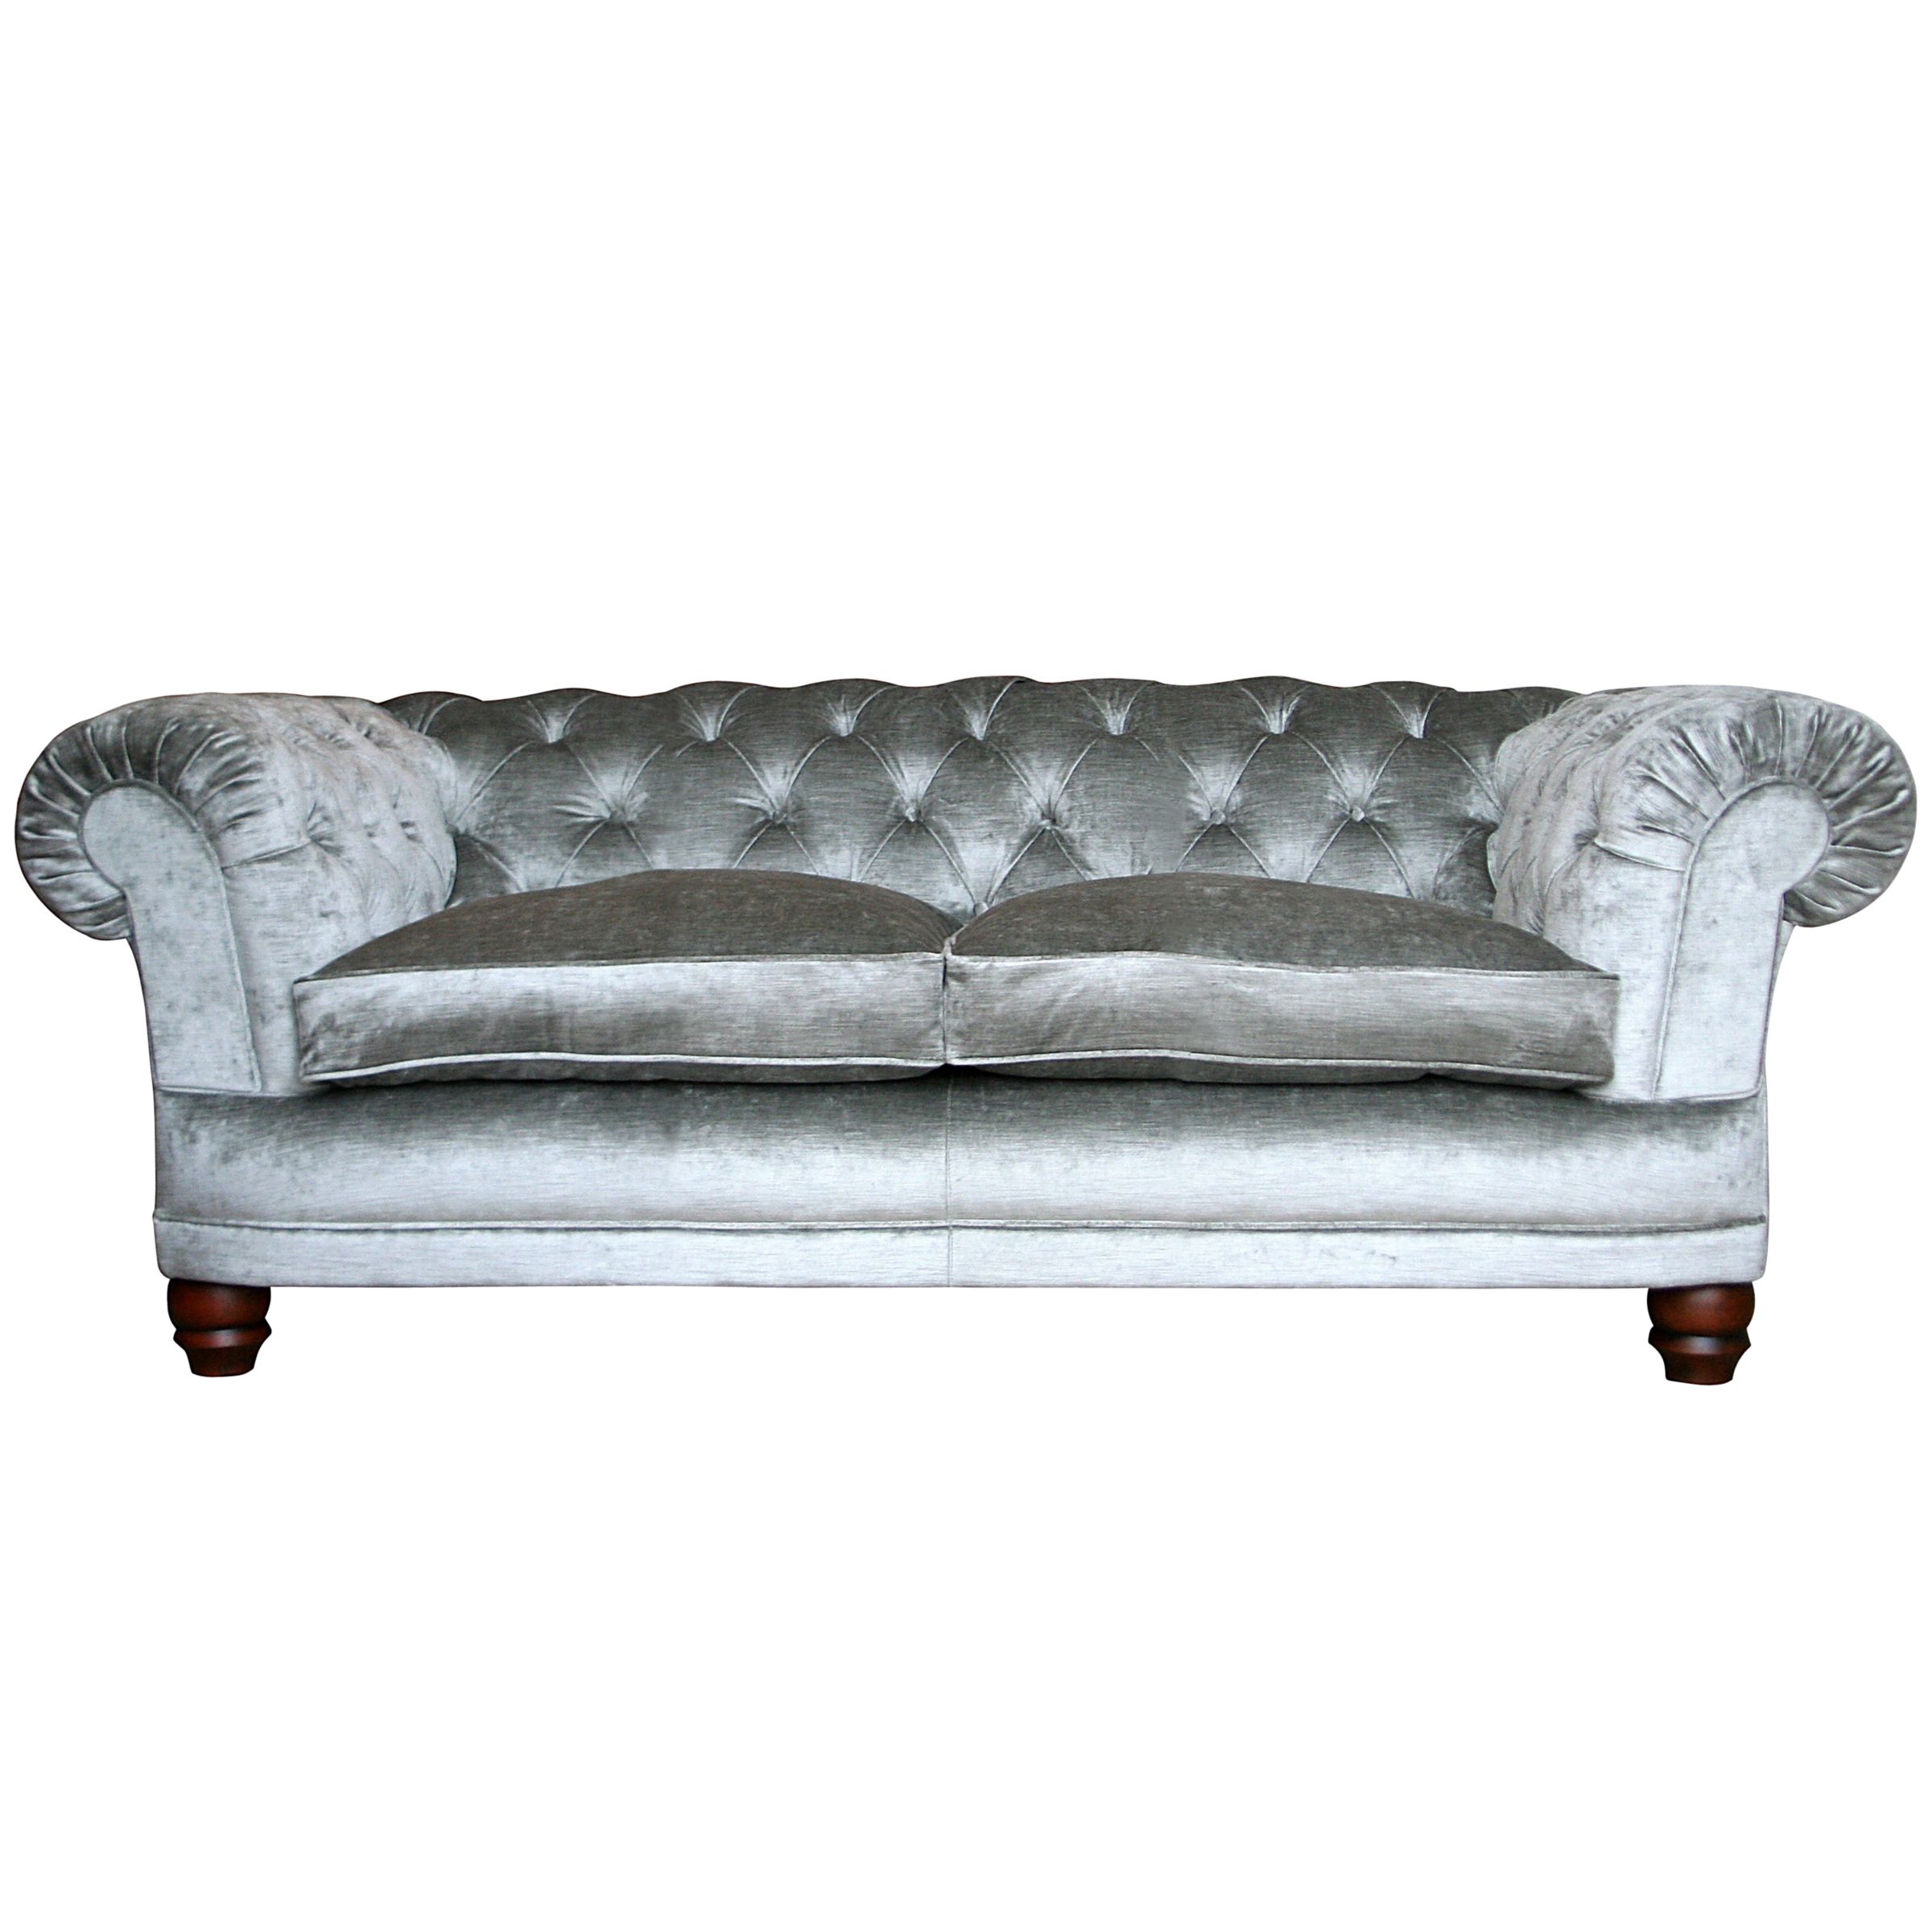 John Lewis Chatsworth Medium Chesterfield Sofa, Palermo Silver, width 193cm